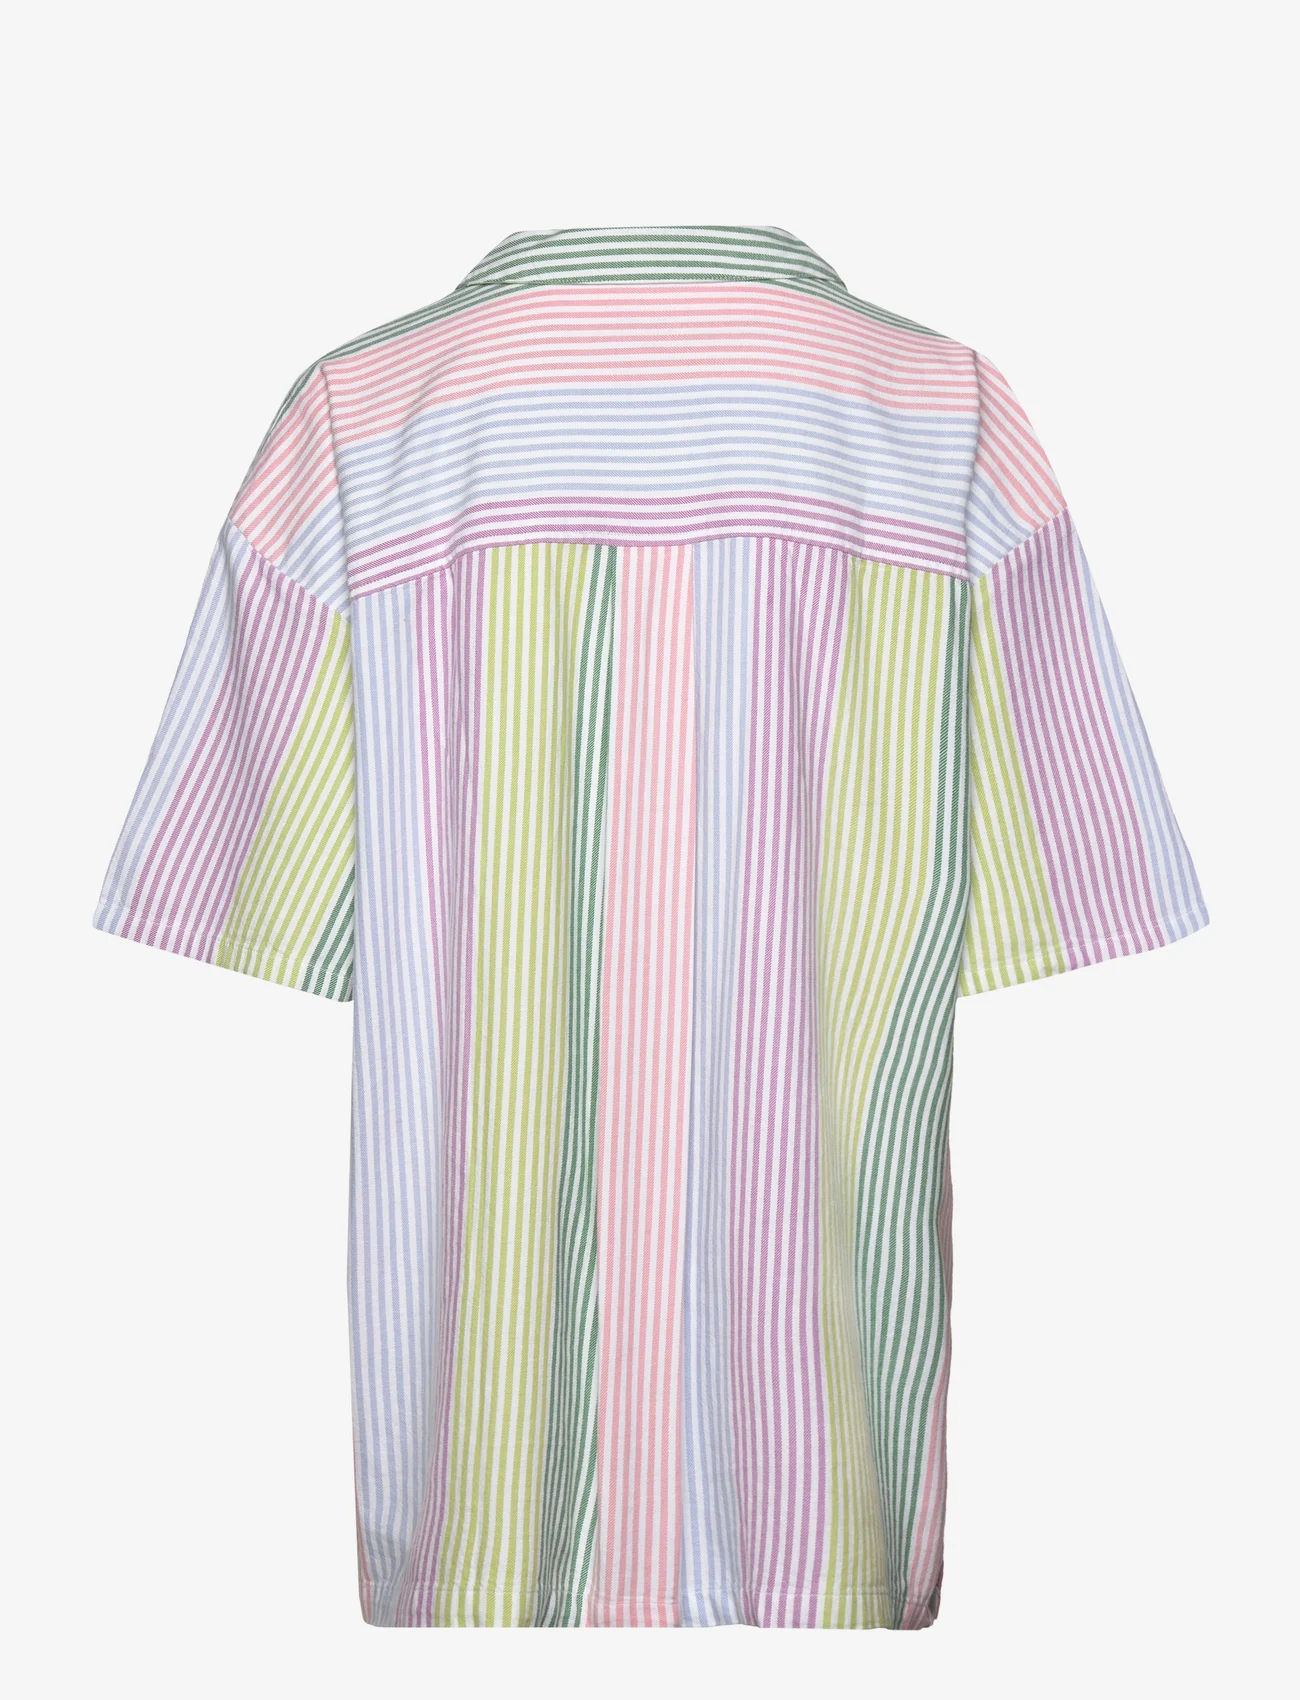 Lee Jeans - CABANA SHIRT - kurzärmlige hemden - della pink - 1